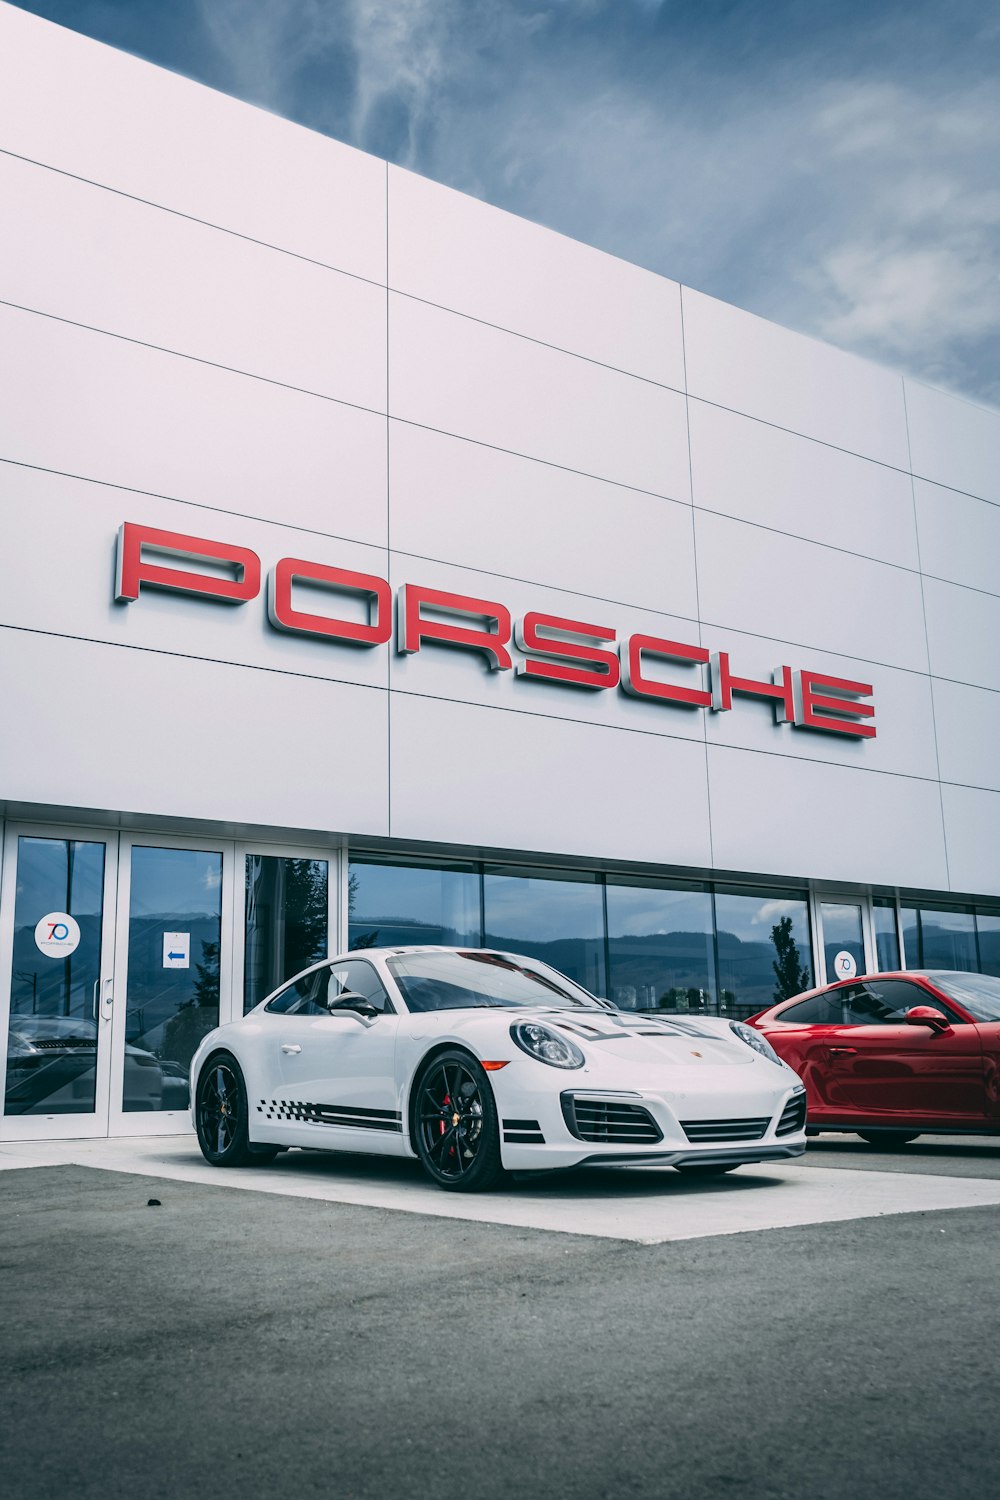 Porsche building